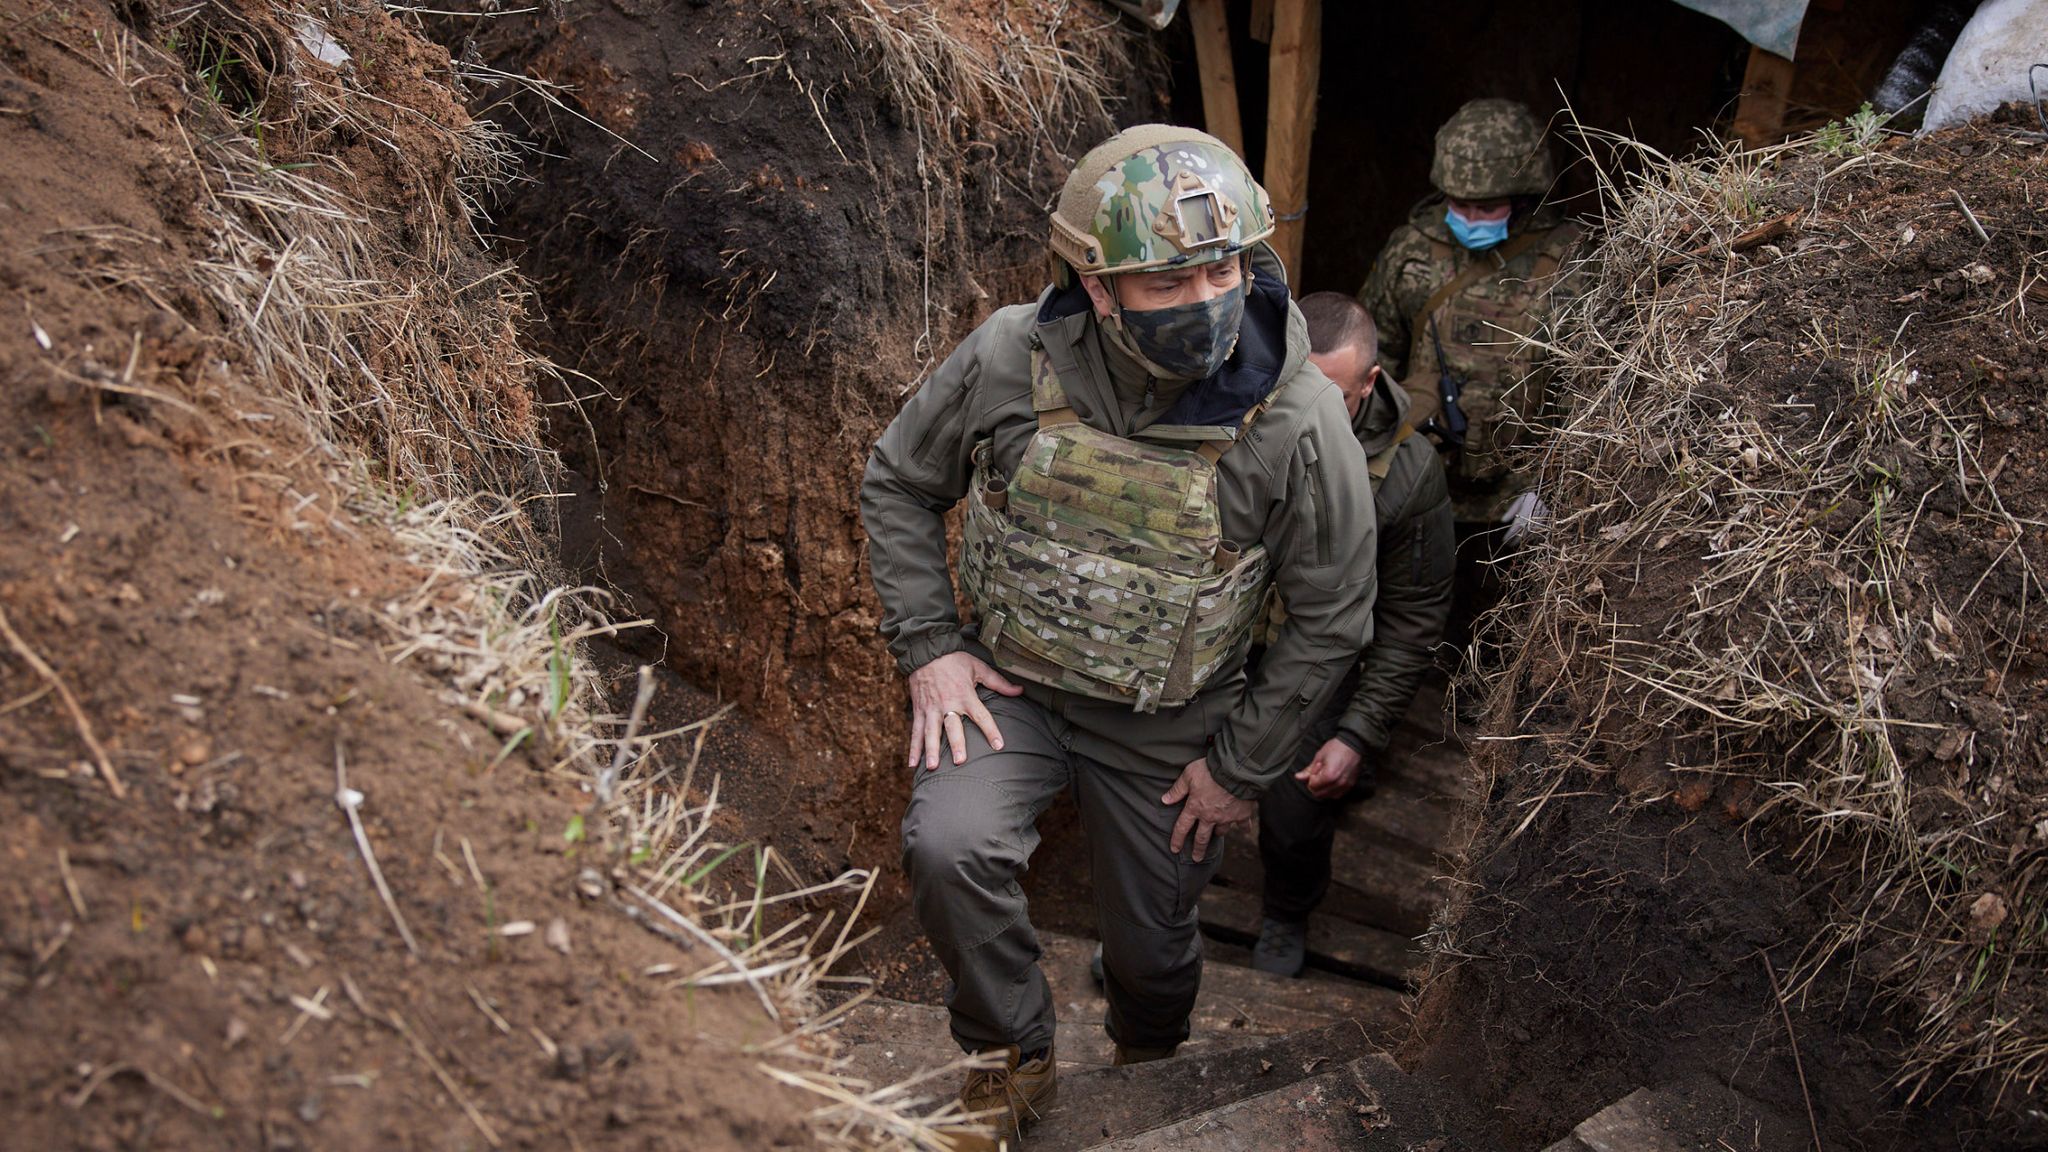 Ukraina gagalkan upaya pasukan elite chechen pro-rusia bunuh zelensky